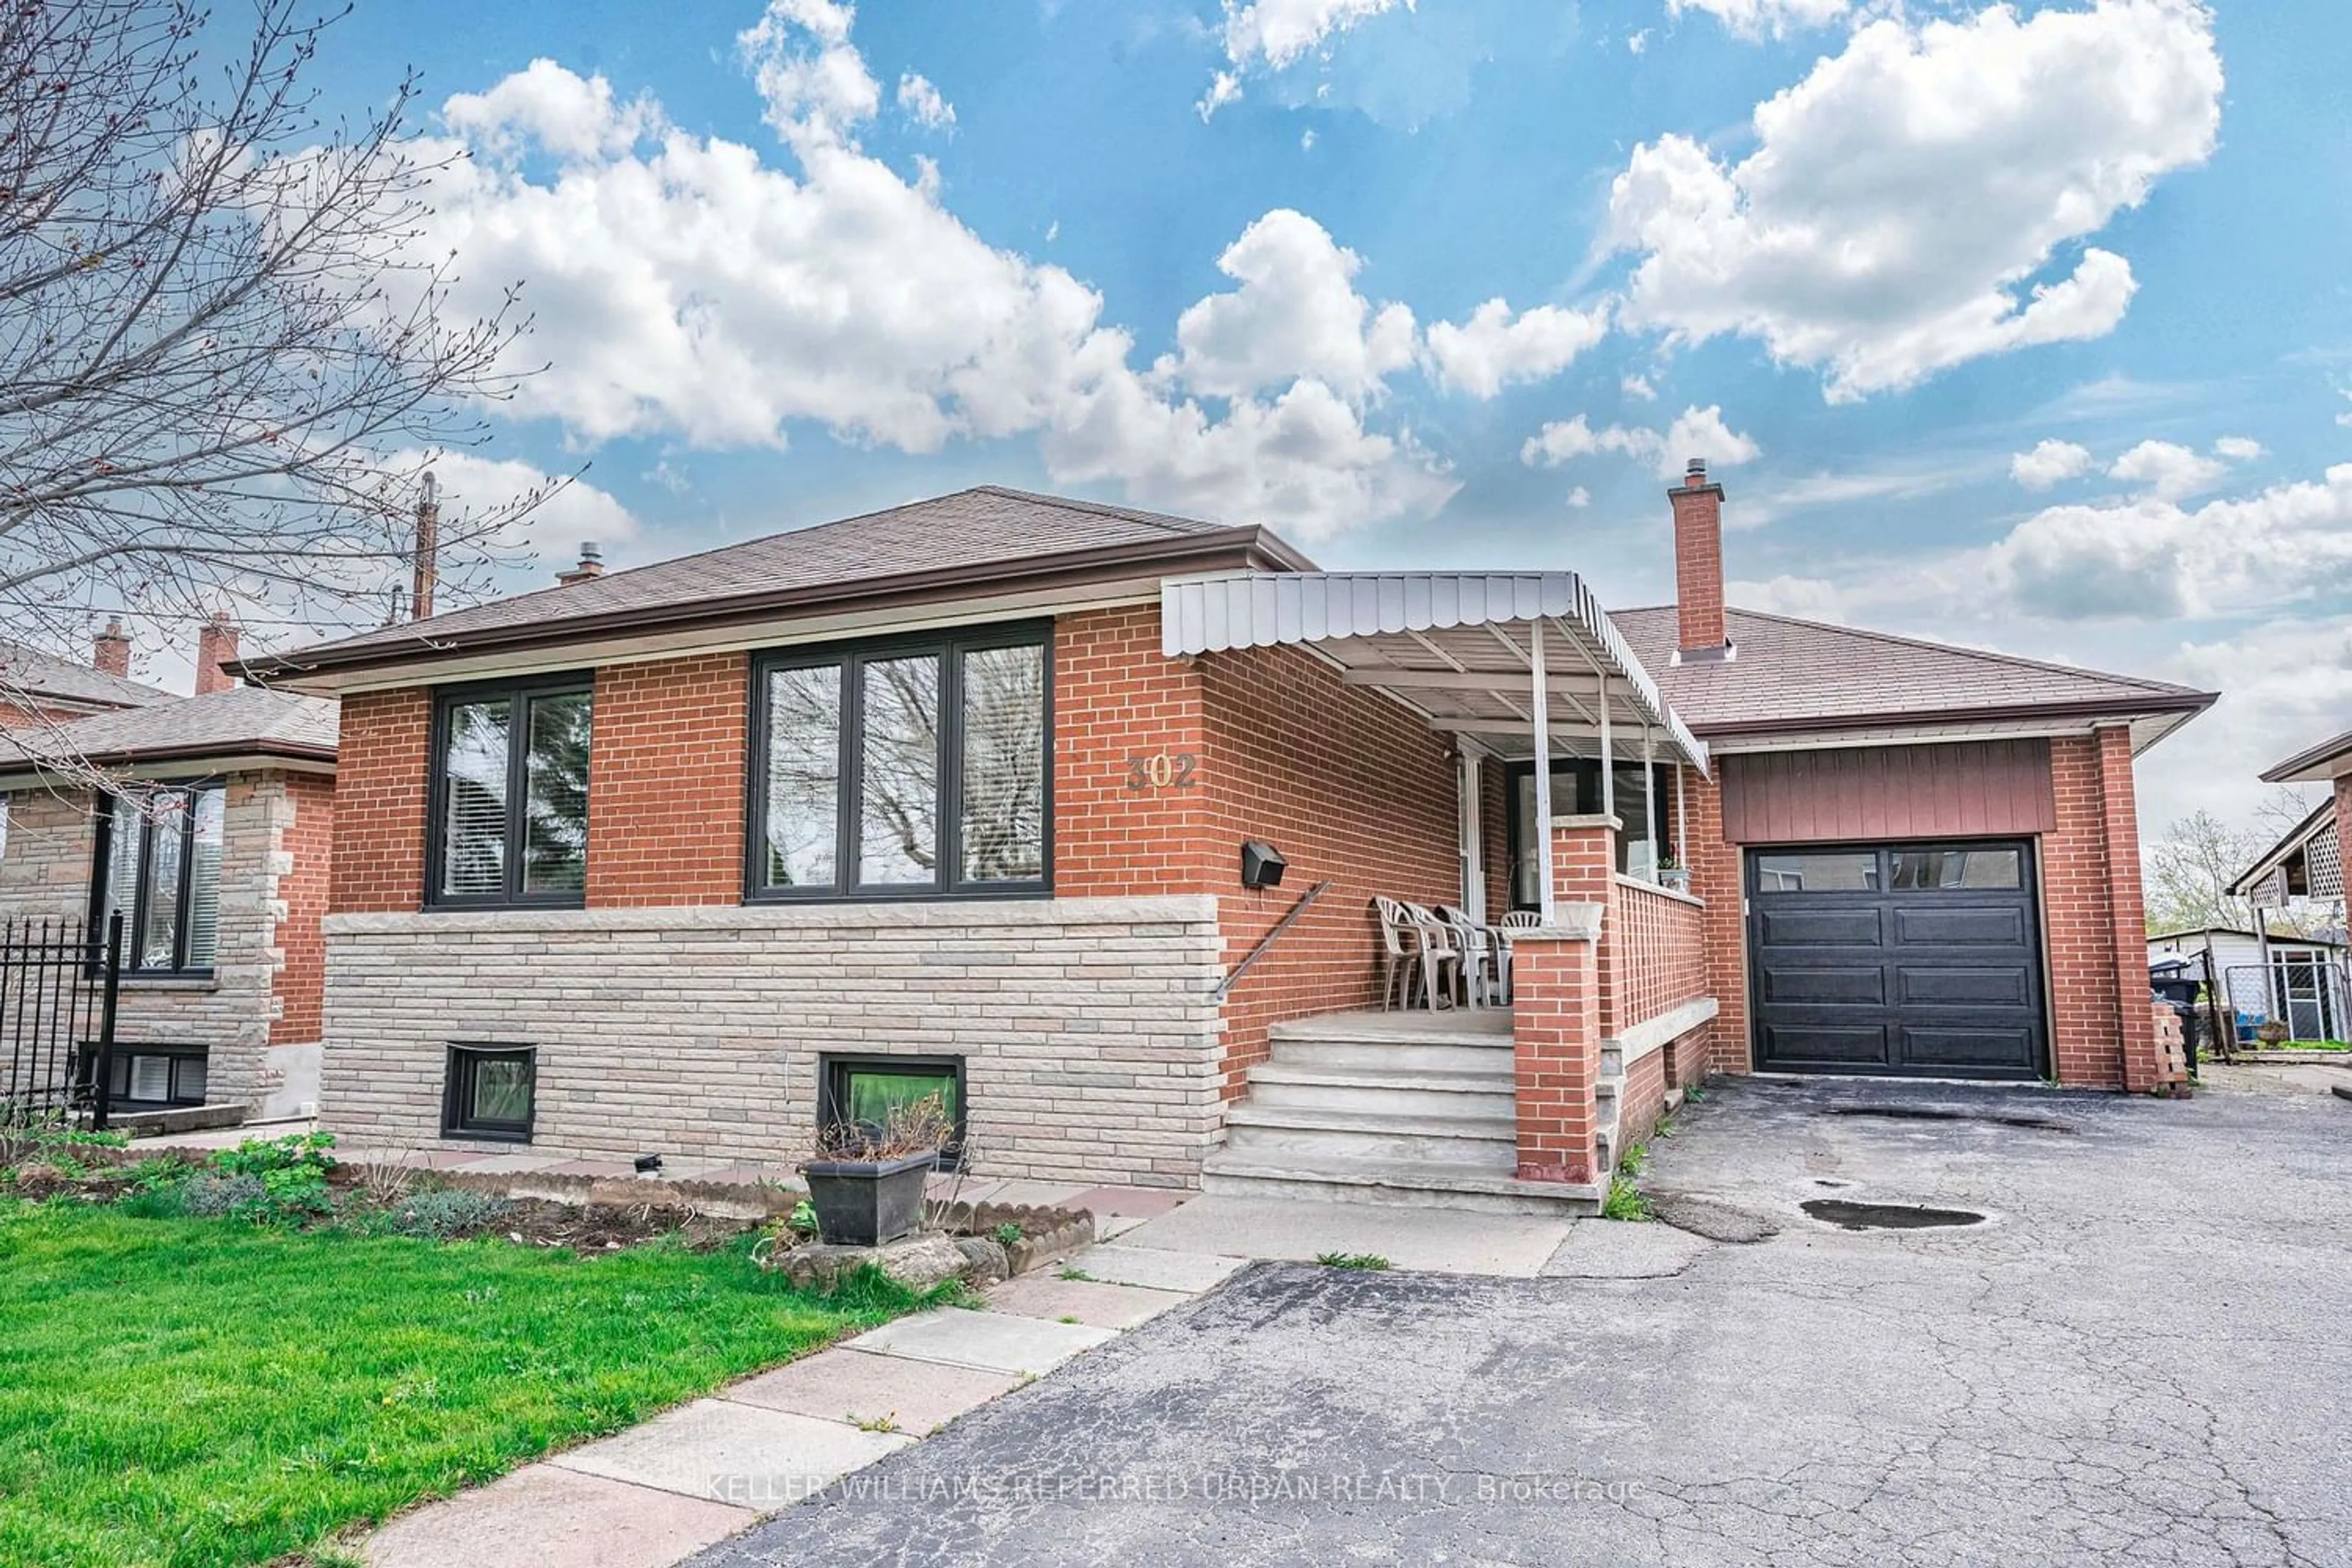 Home with brick exterior material for 302 Culford Rd, Toronto Ontario M6L 2V5